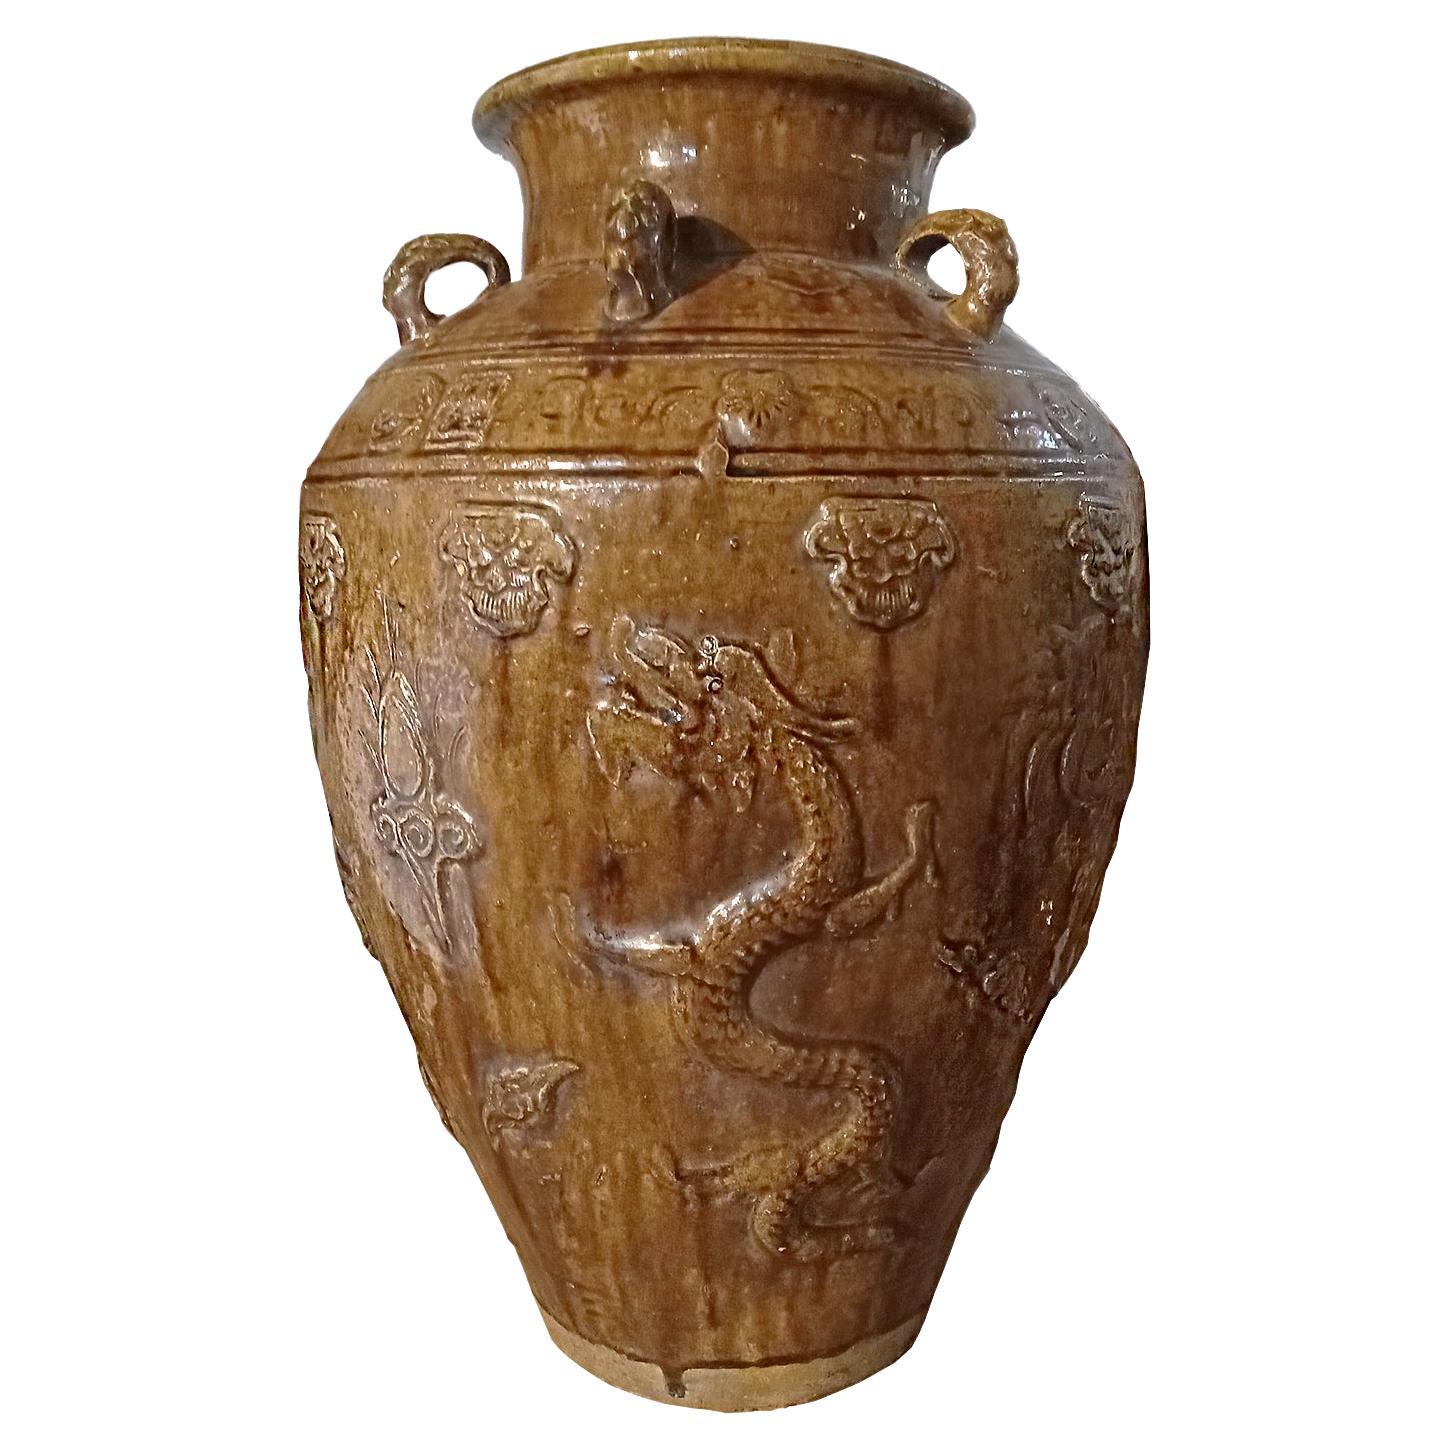 Urne / JAR / Vase en terre cuite indonésienne à glaçure Brown et motif de dragon